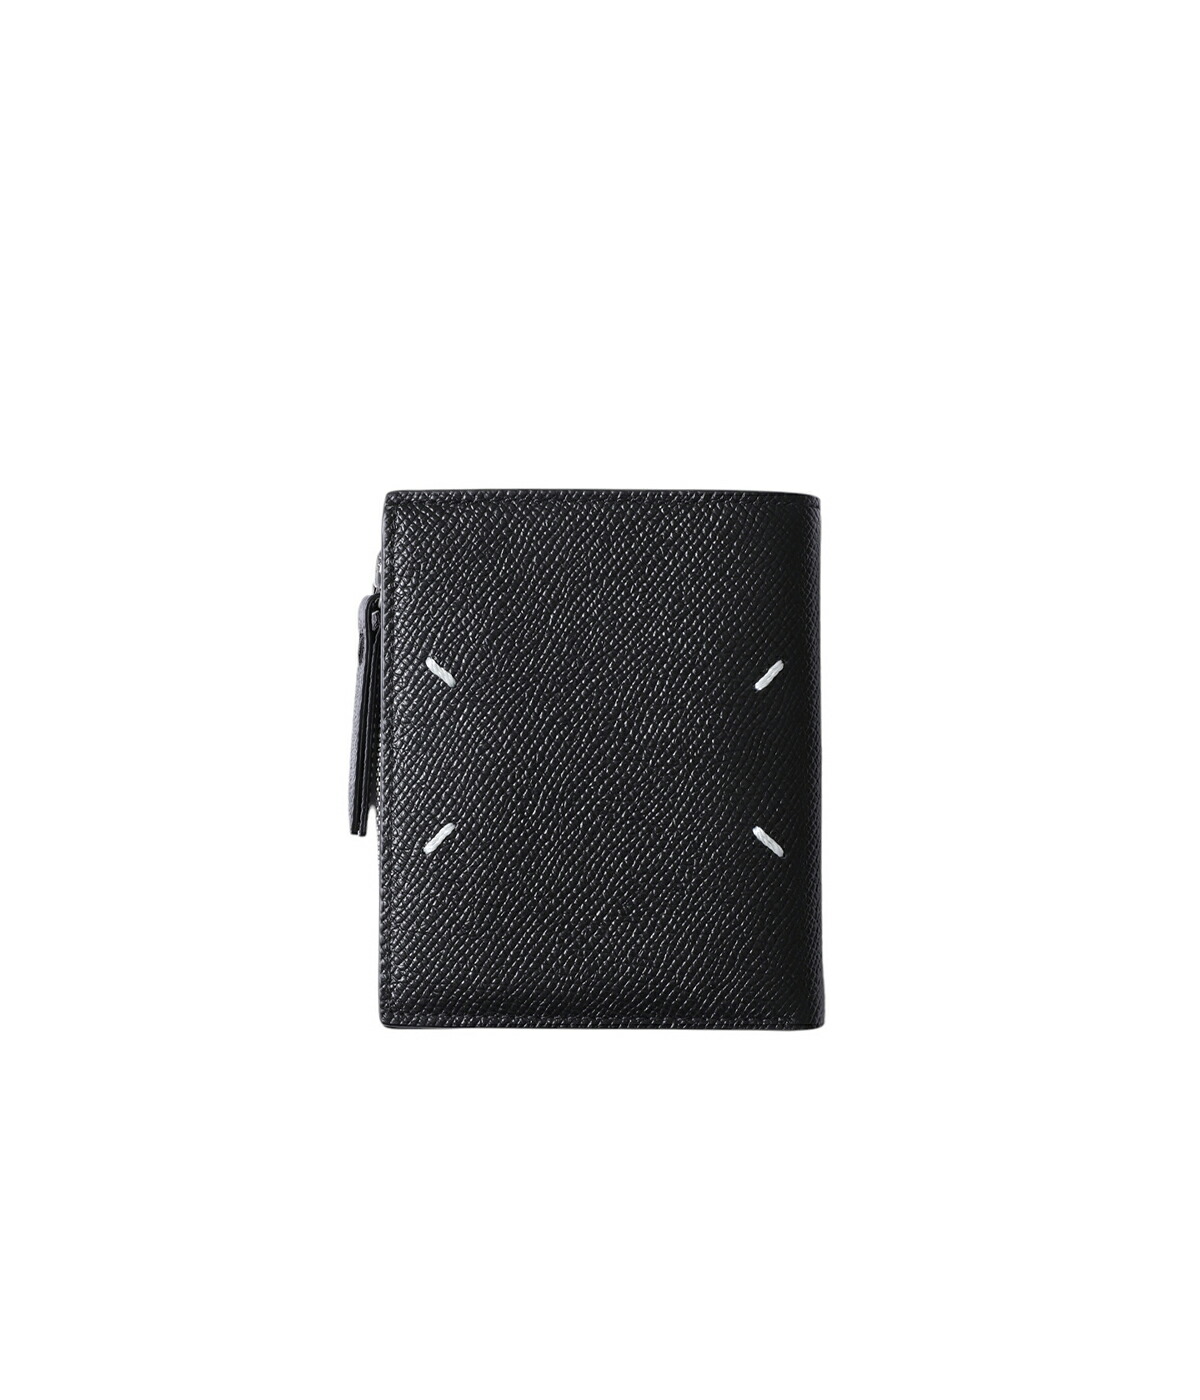 Maison Margiela / メゾン マルジェラ ： Small Flip flap wallet ： SA1UI0020-P4745